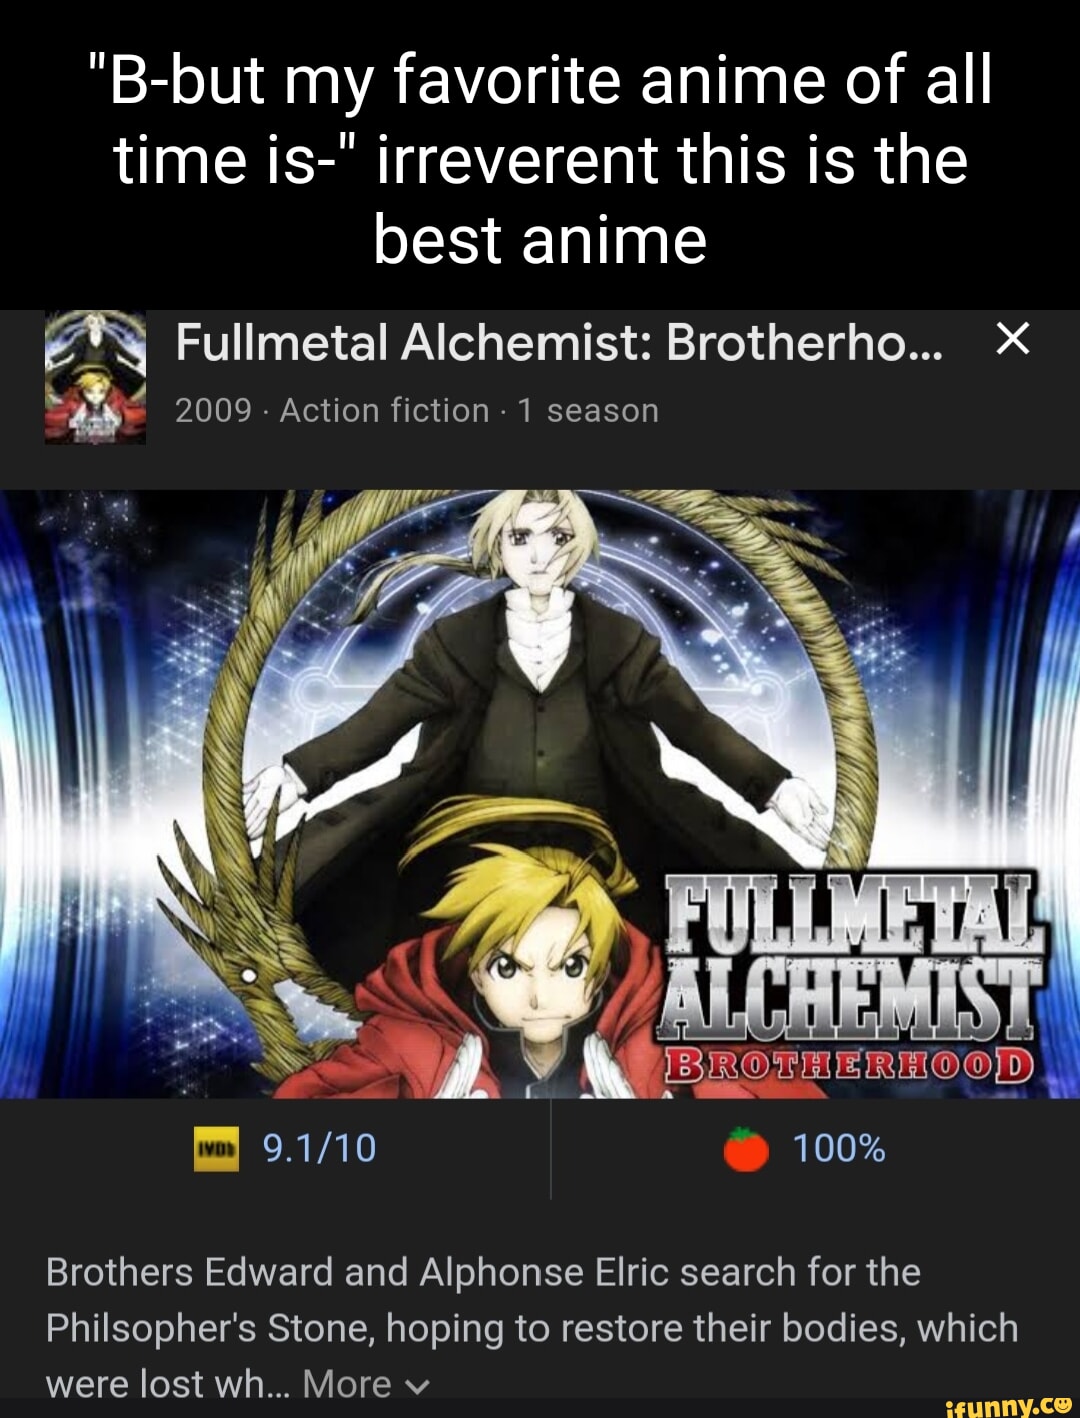 fullmetal alchemist: brotherhood is one of my favorite animes of